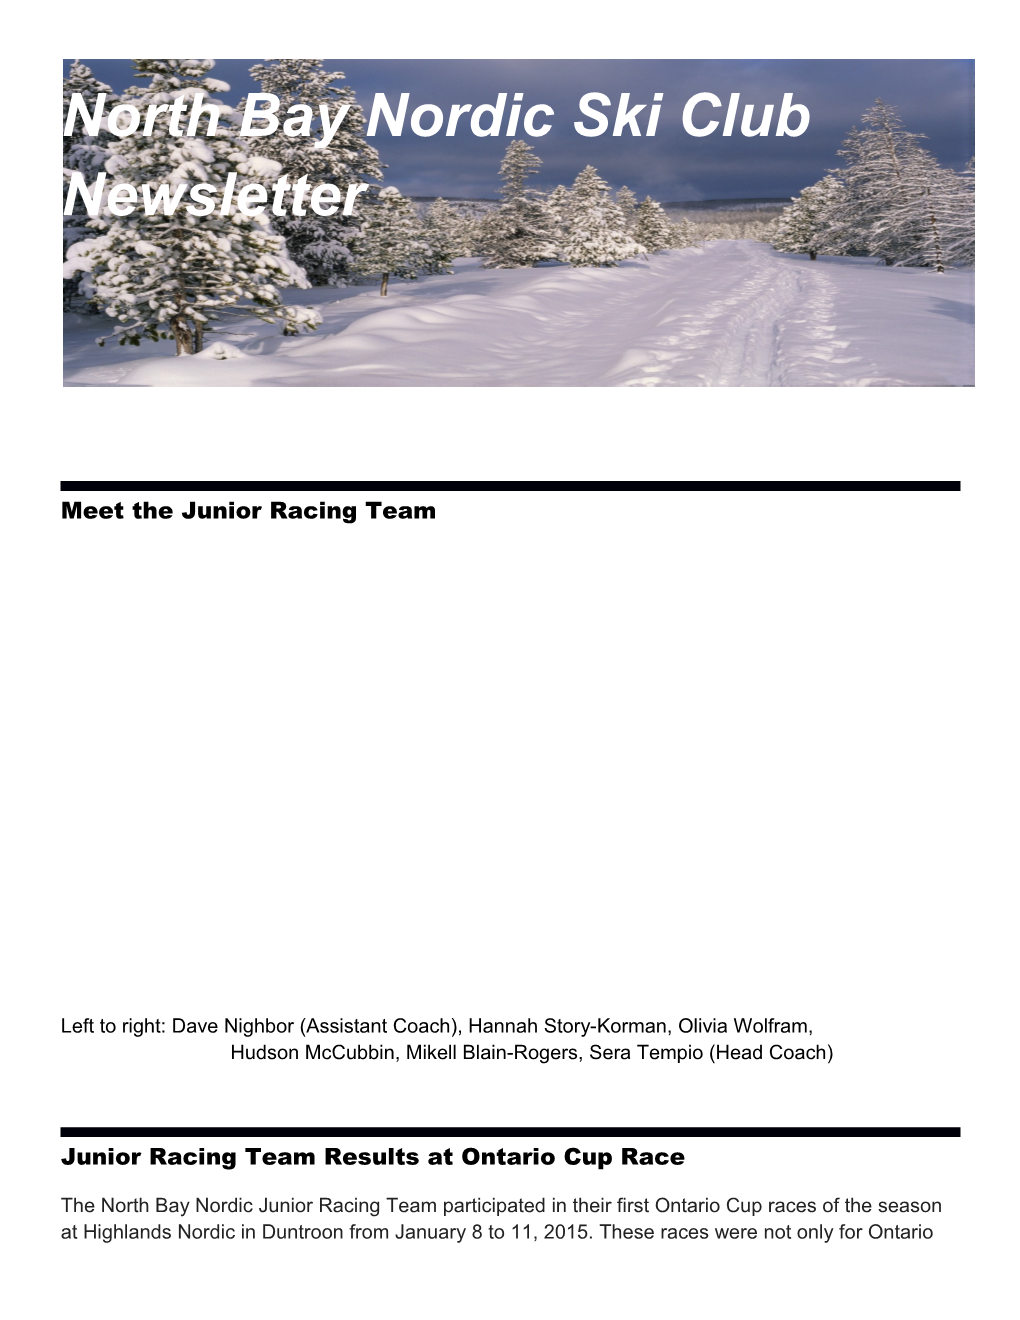 North Bay Nordic Ski Club Newsletter